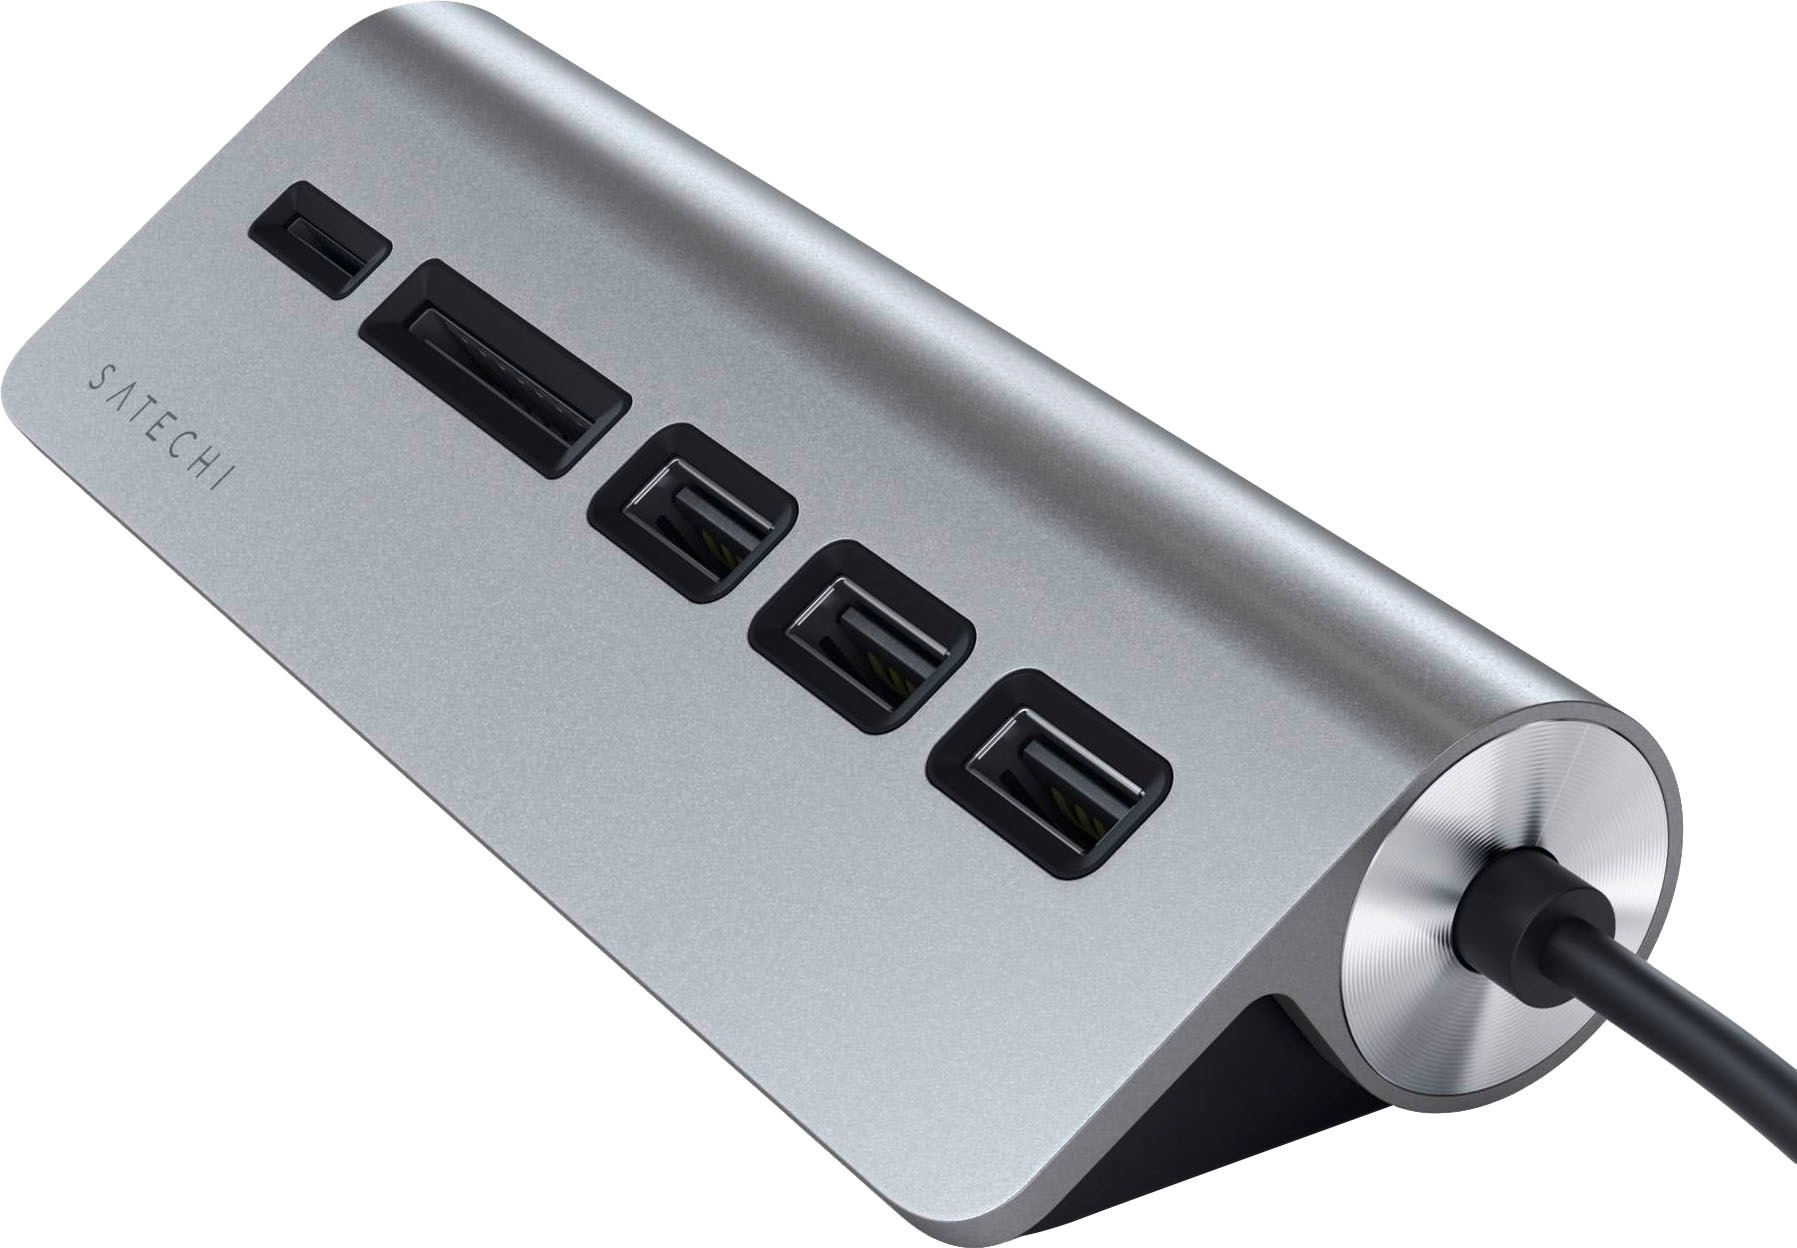 Satechi USB-Adapter »Type-C Aluminum USB Hub & Card Reader«, USB 3.0 Typ A zu USB Typ C